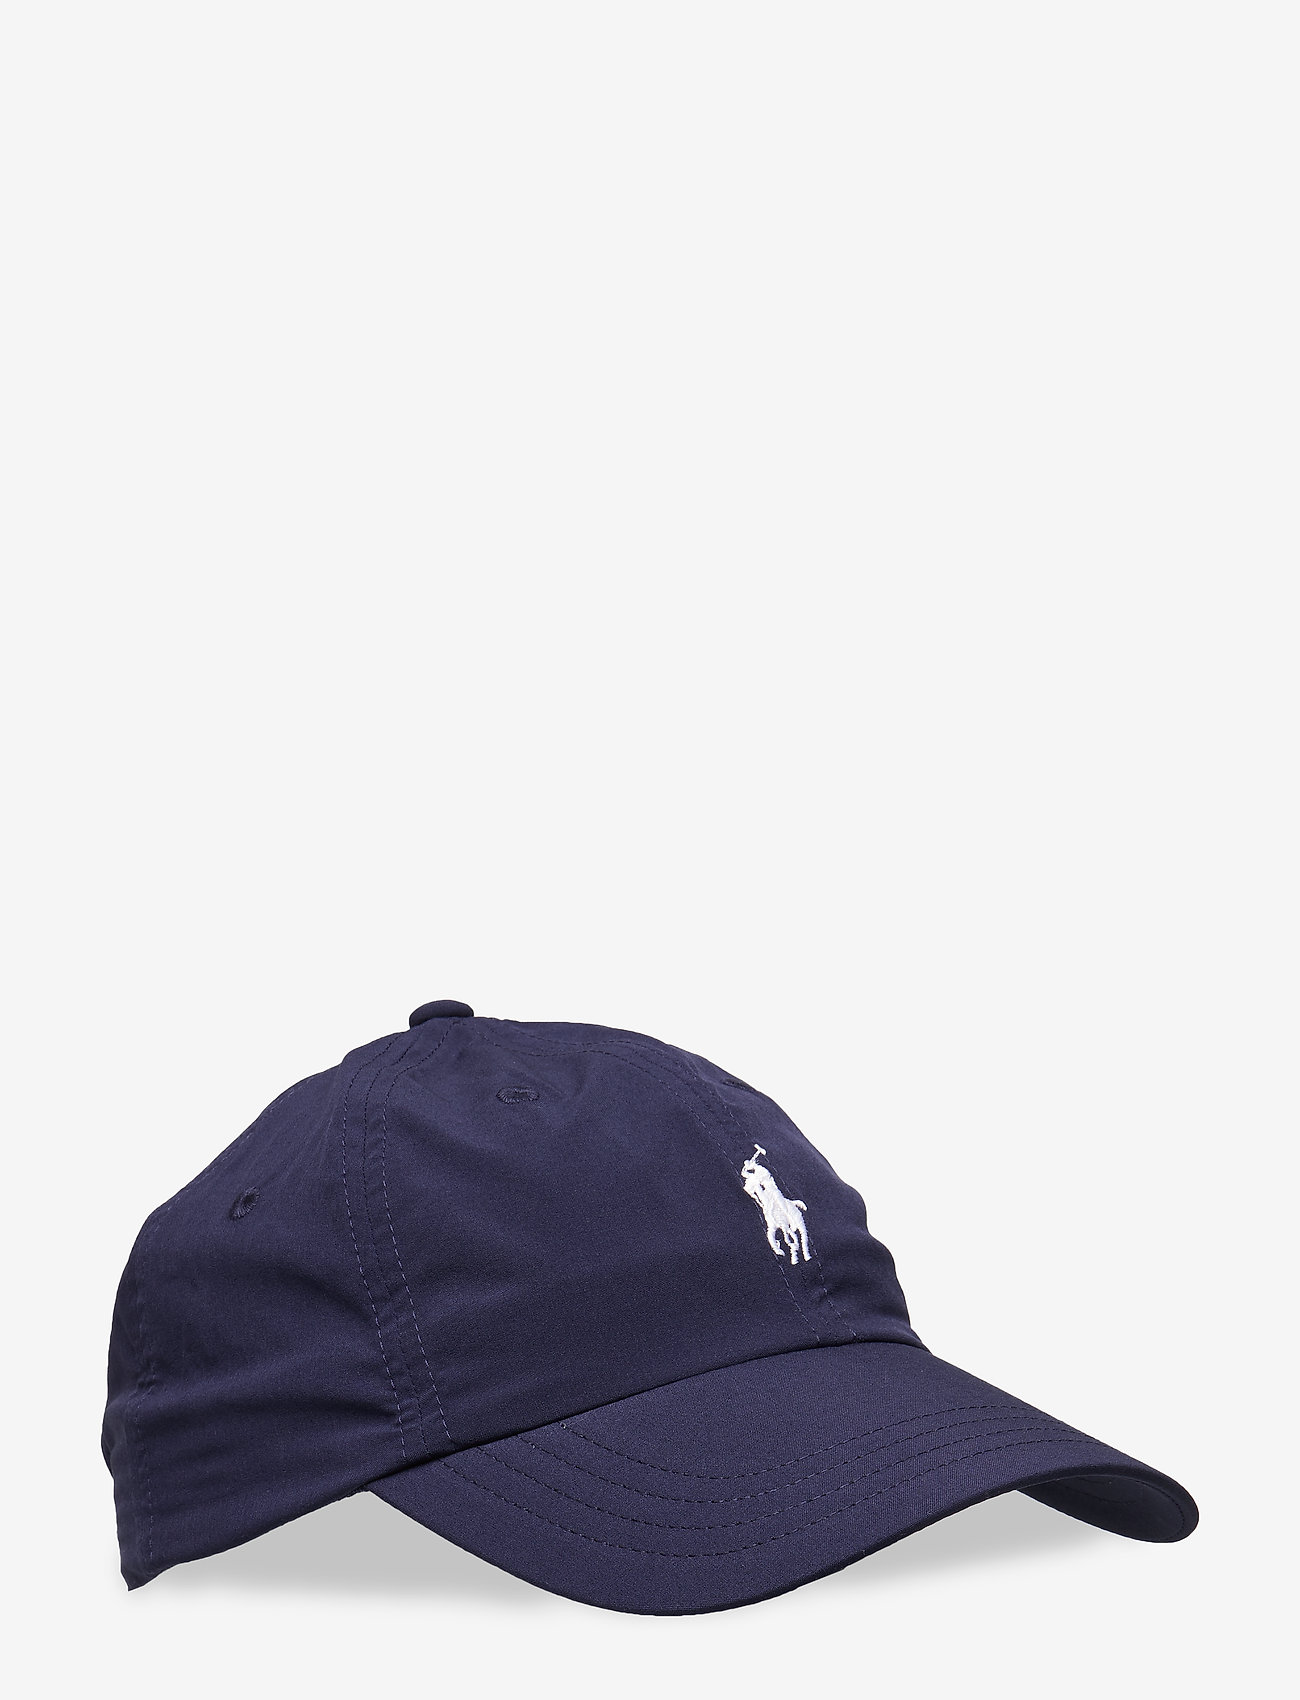 ralph lauren golf hat